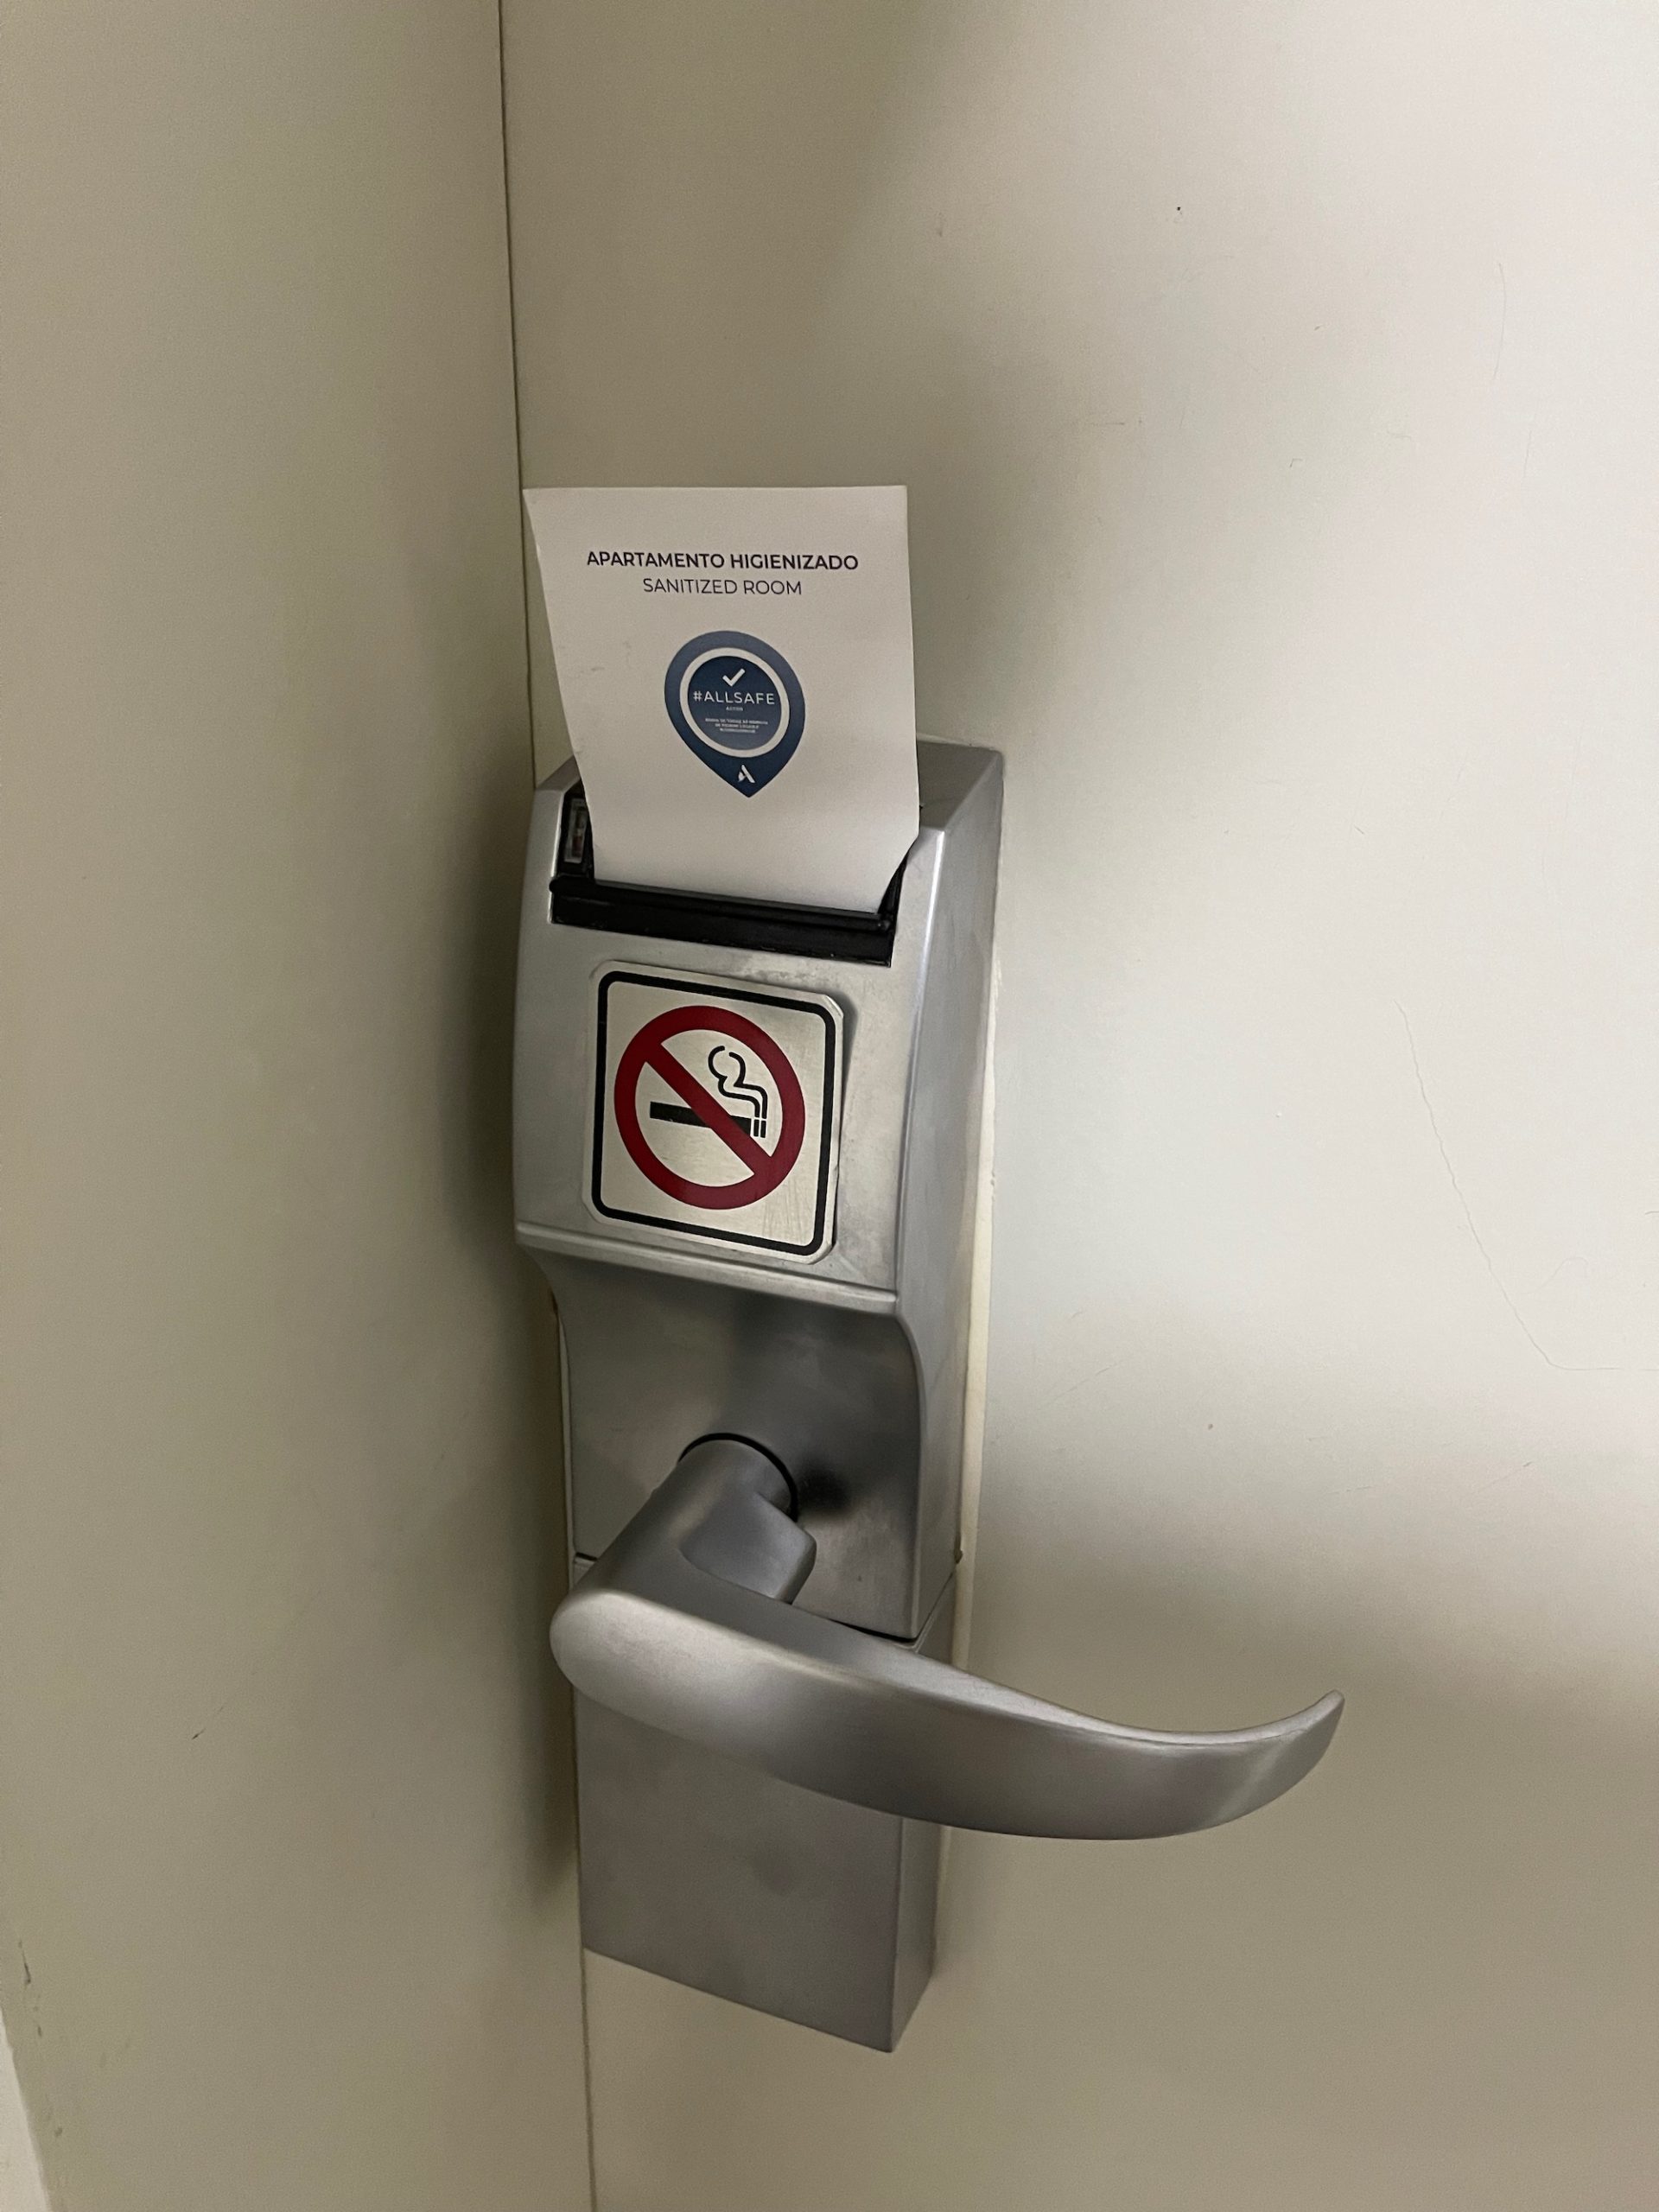 a door handle with a paper in it